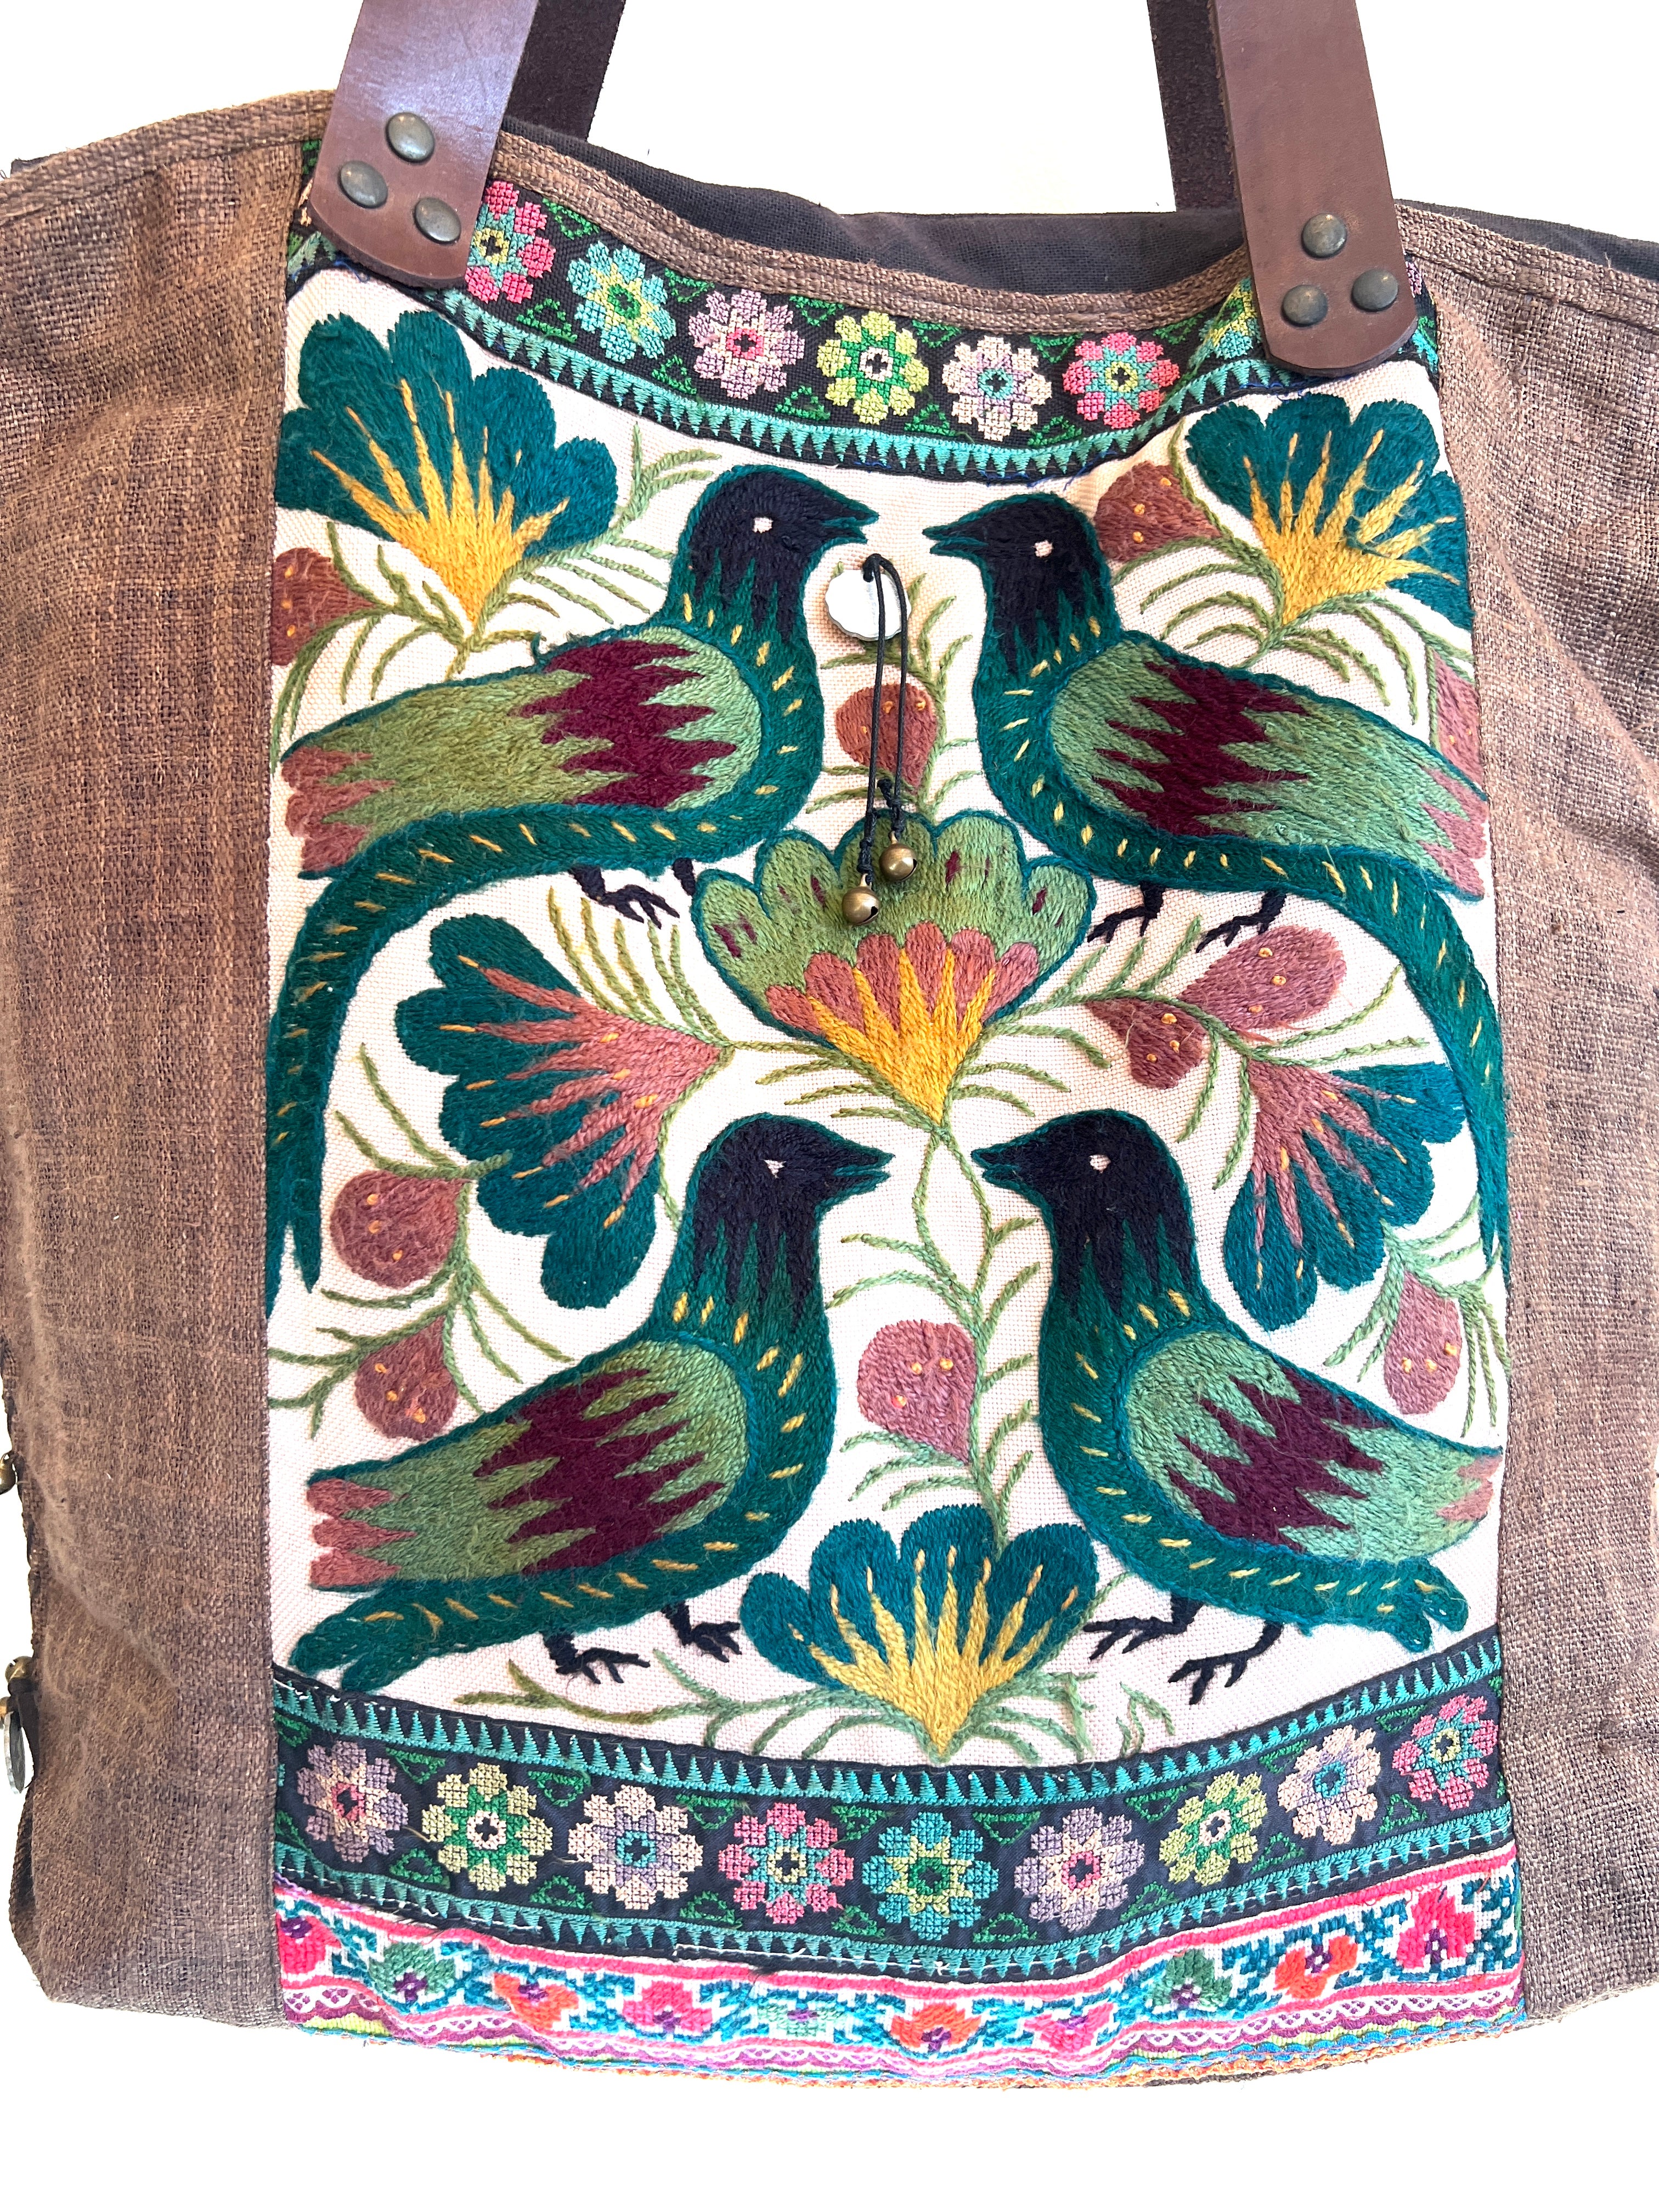 “Mekong” #3 Vintage Fabric Tote